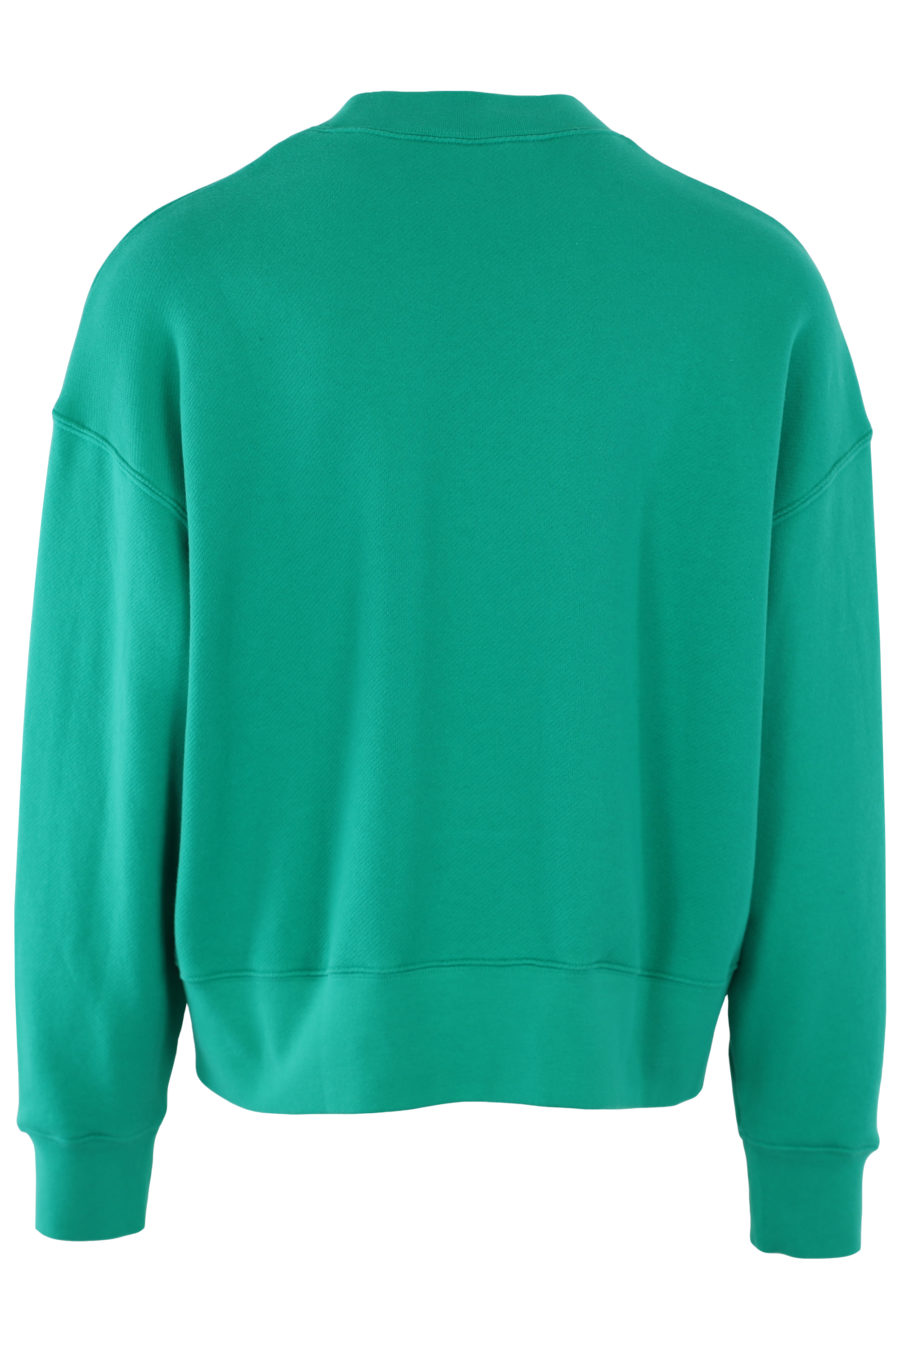 Green sweatshirt with bear - IMG 1368